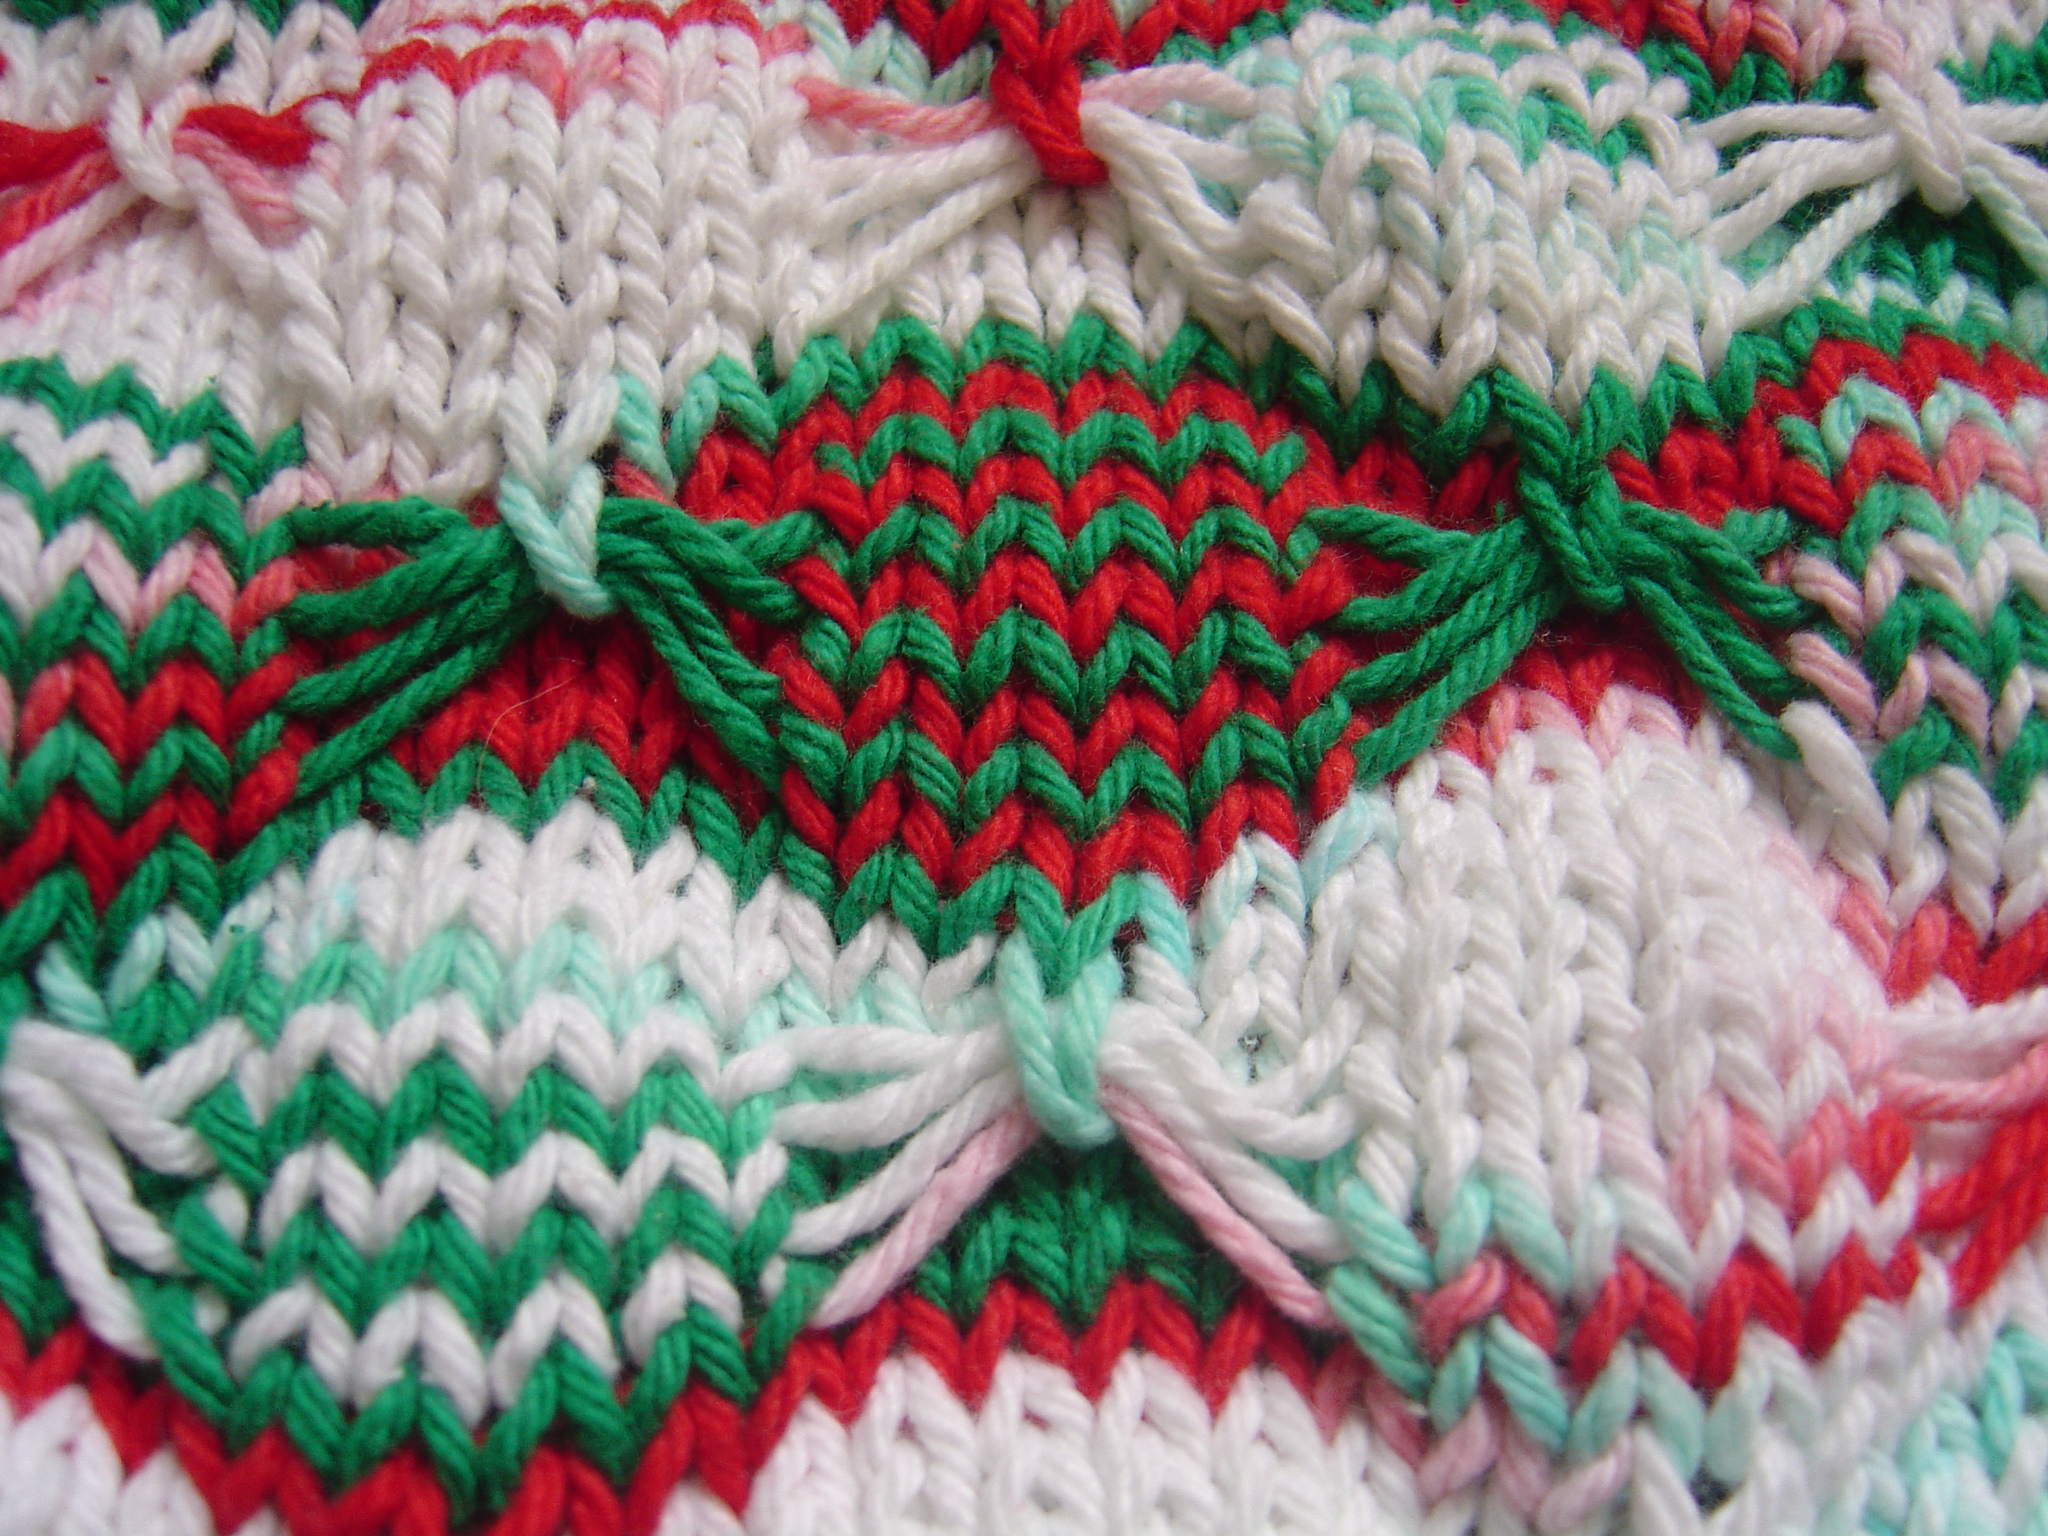 Knitting Patterns, Knitting Kits: Knitted Christmas Stockings